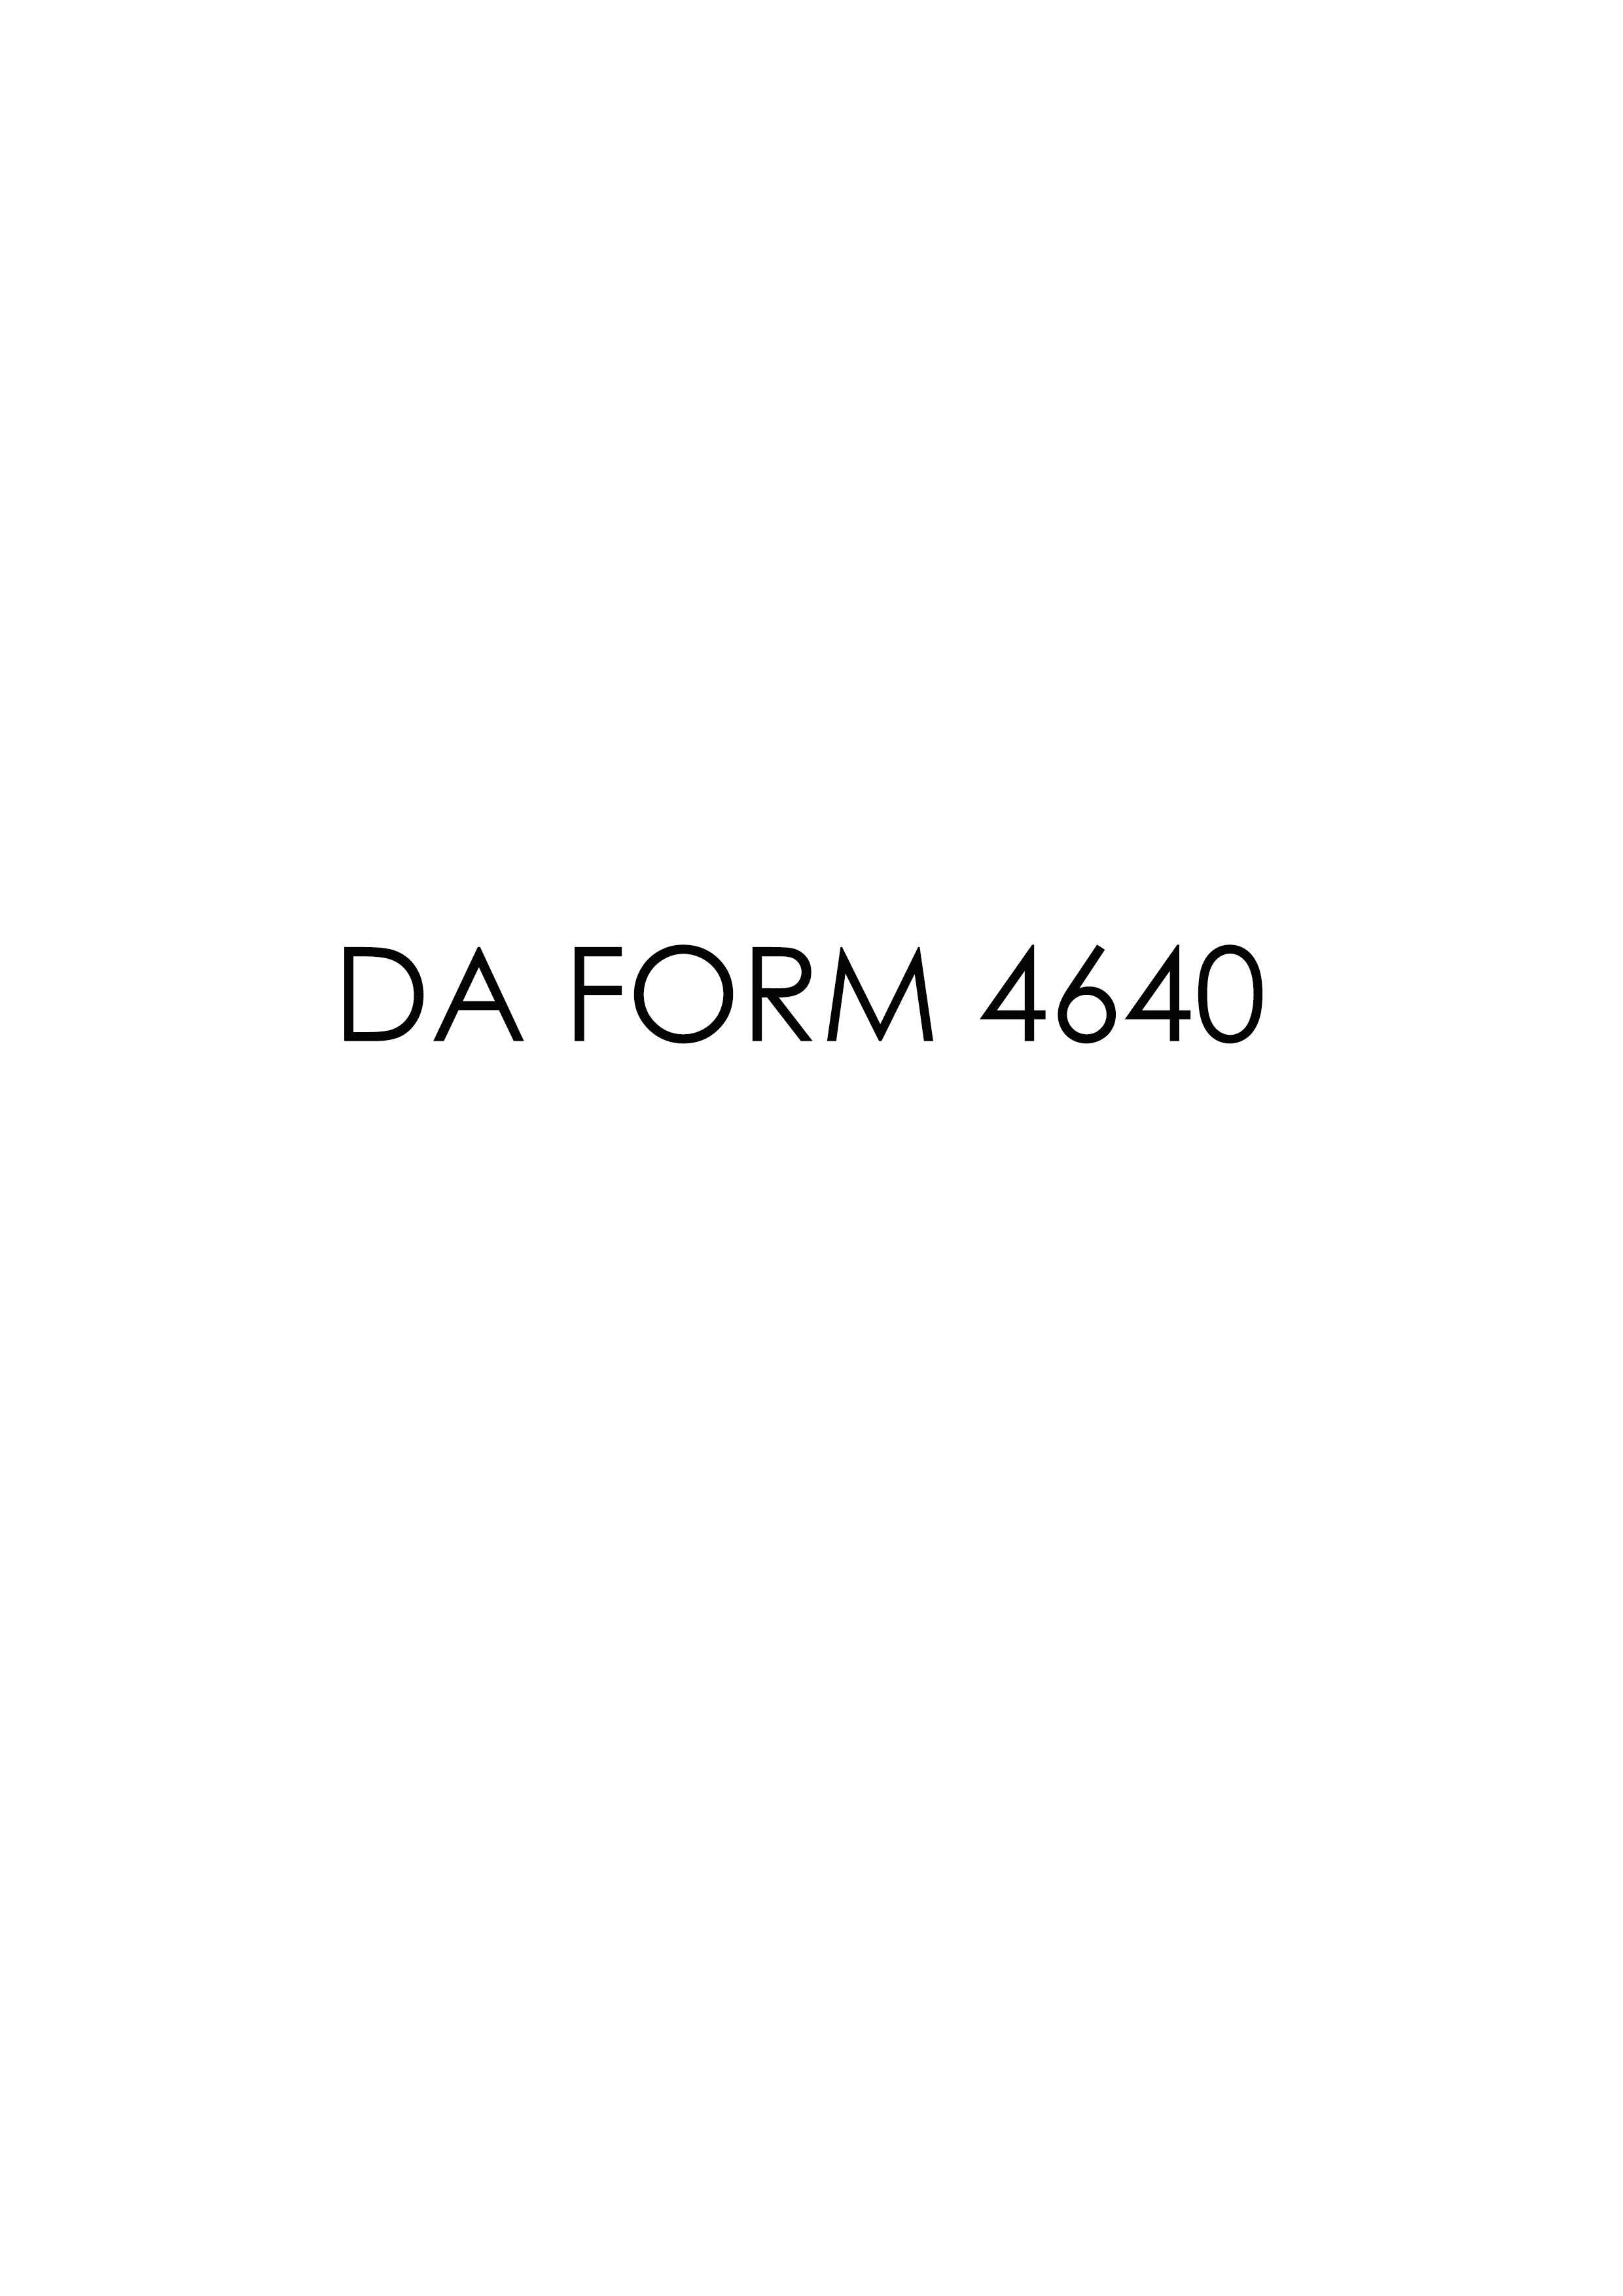 da Form 4640 fillable